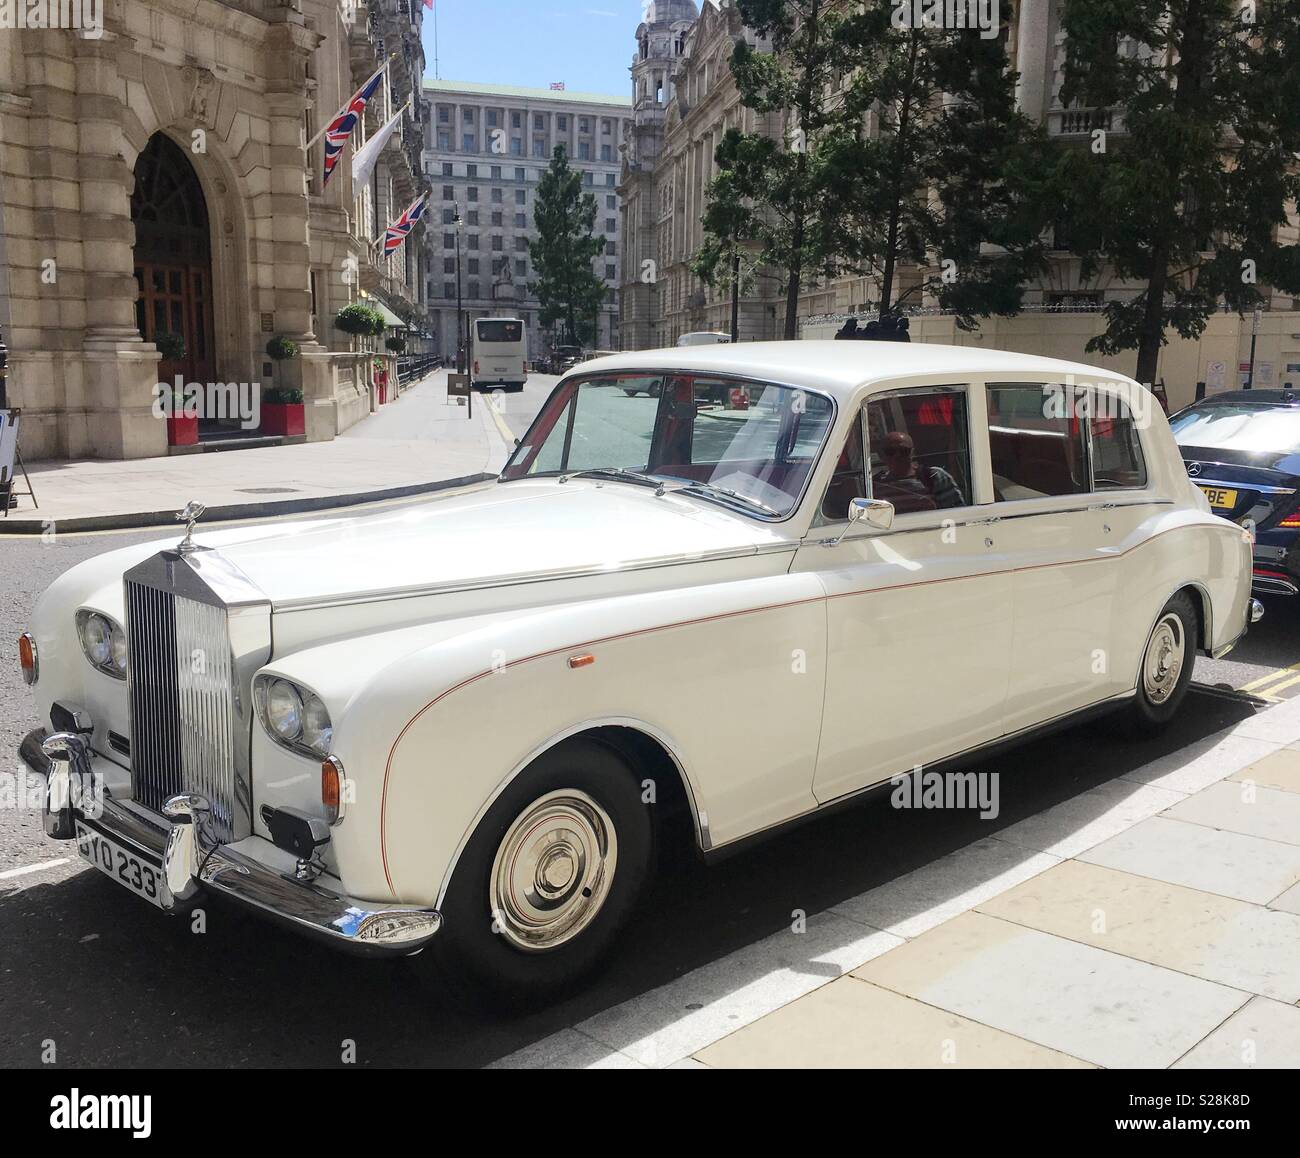 A white Rolls Royce Phantom VI Stock Photo - Alamy